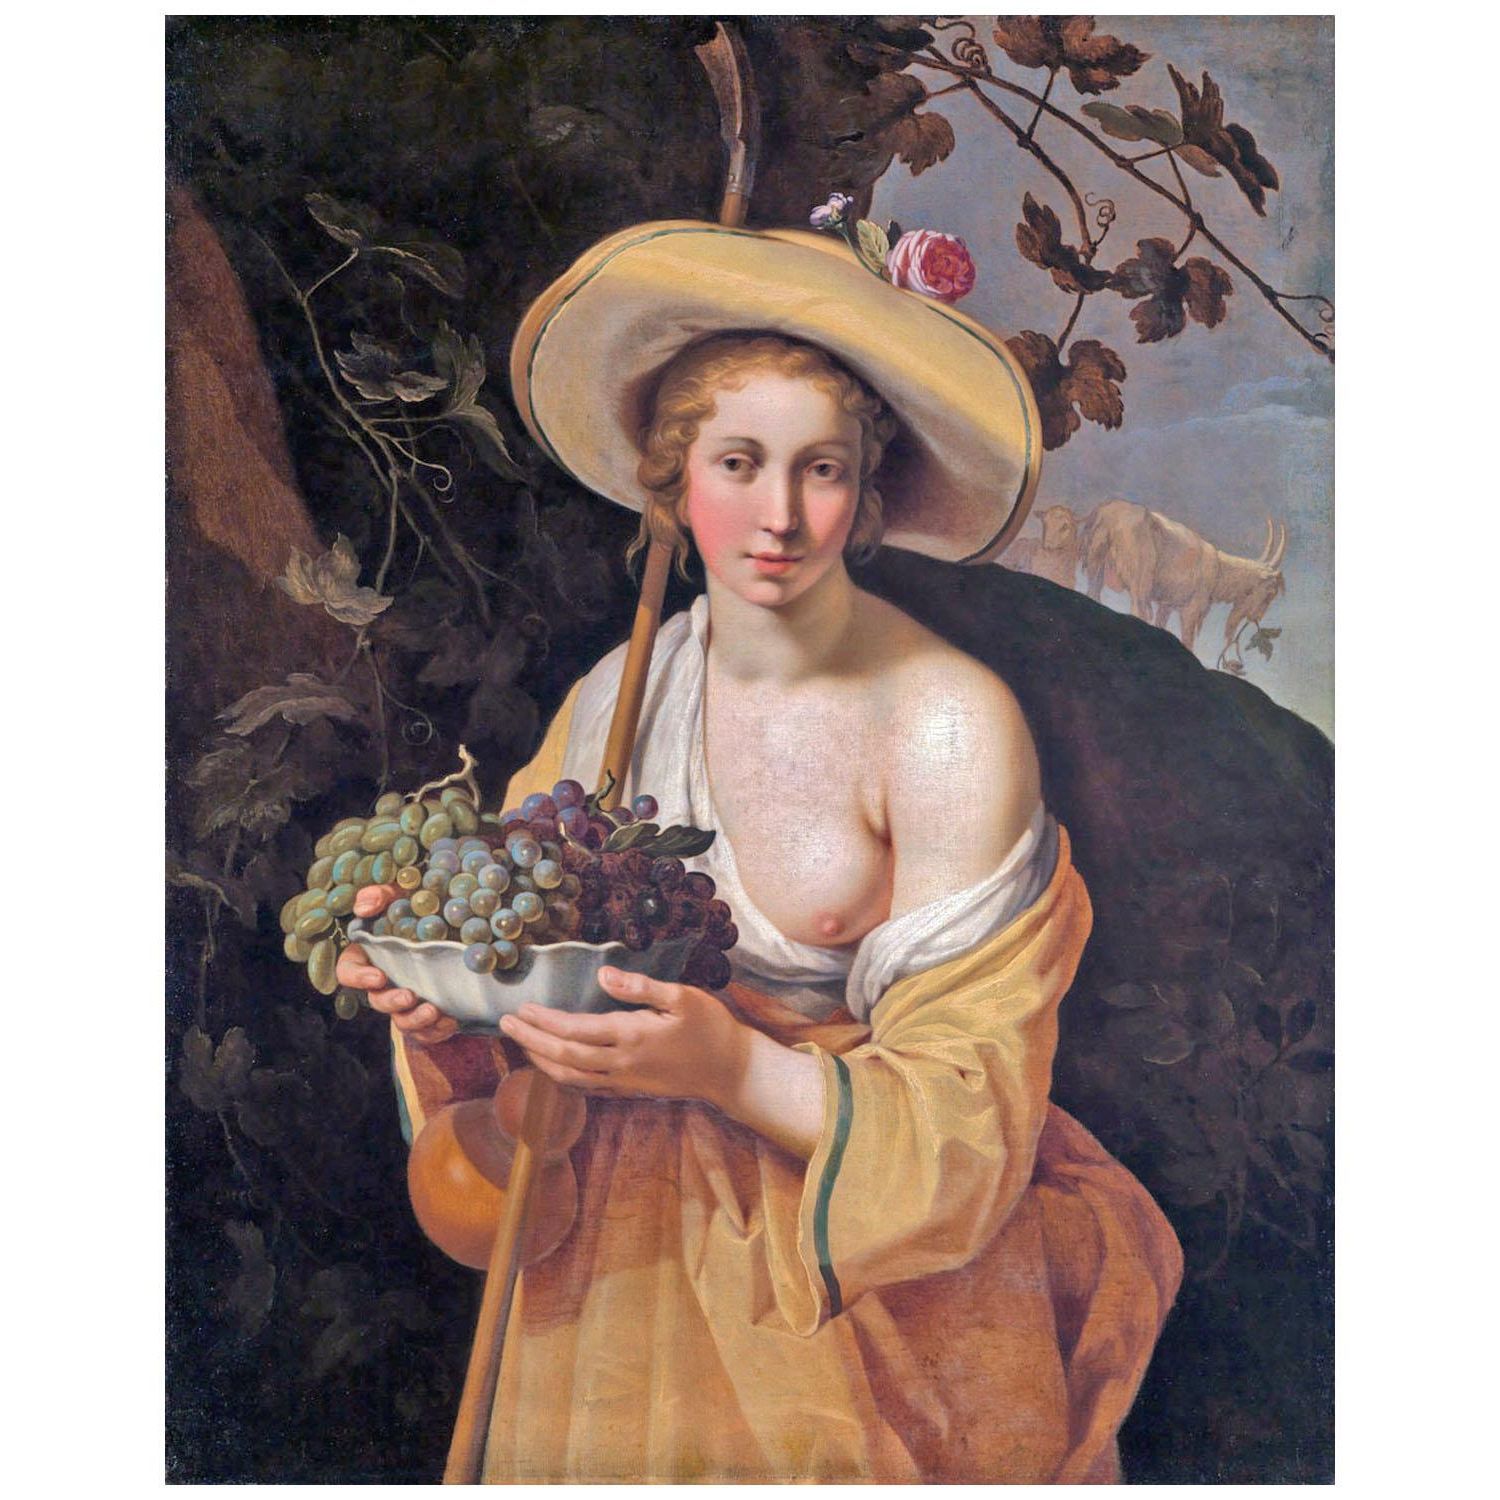 Abraham Bloemaerts. Shepherdess with Grapes. 1628. Kunsthalle Karlsruhe